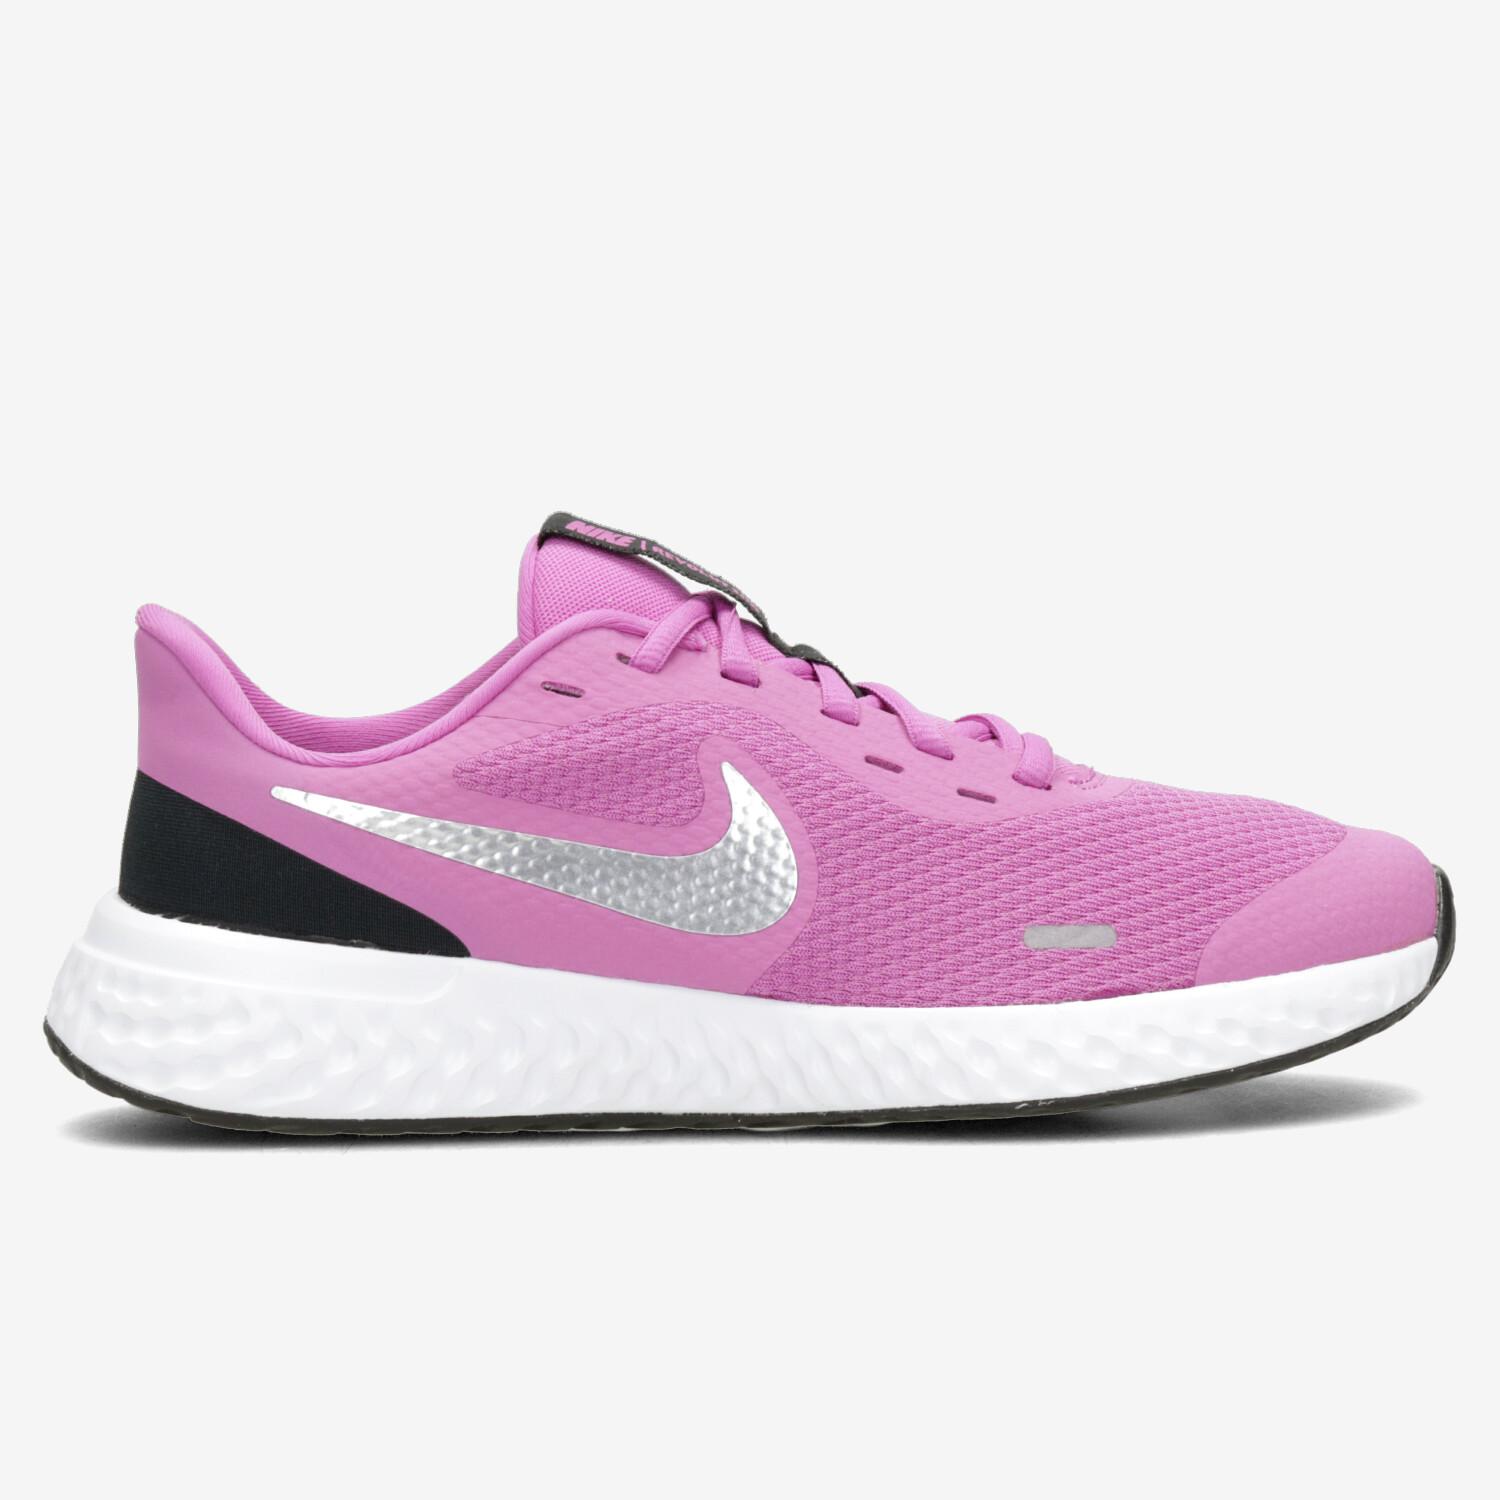 Gárgaras Agradecido Incompatible Nike revolution mujer rosa | Sprinter